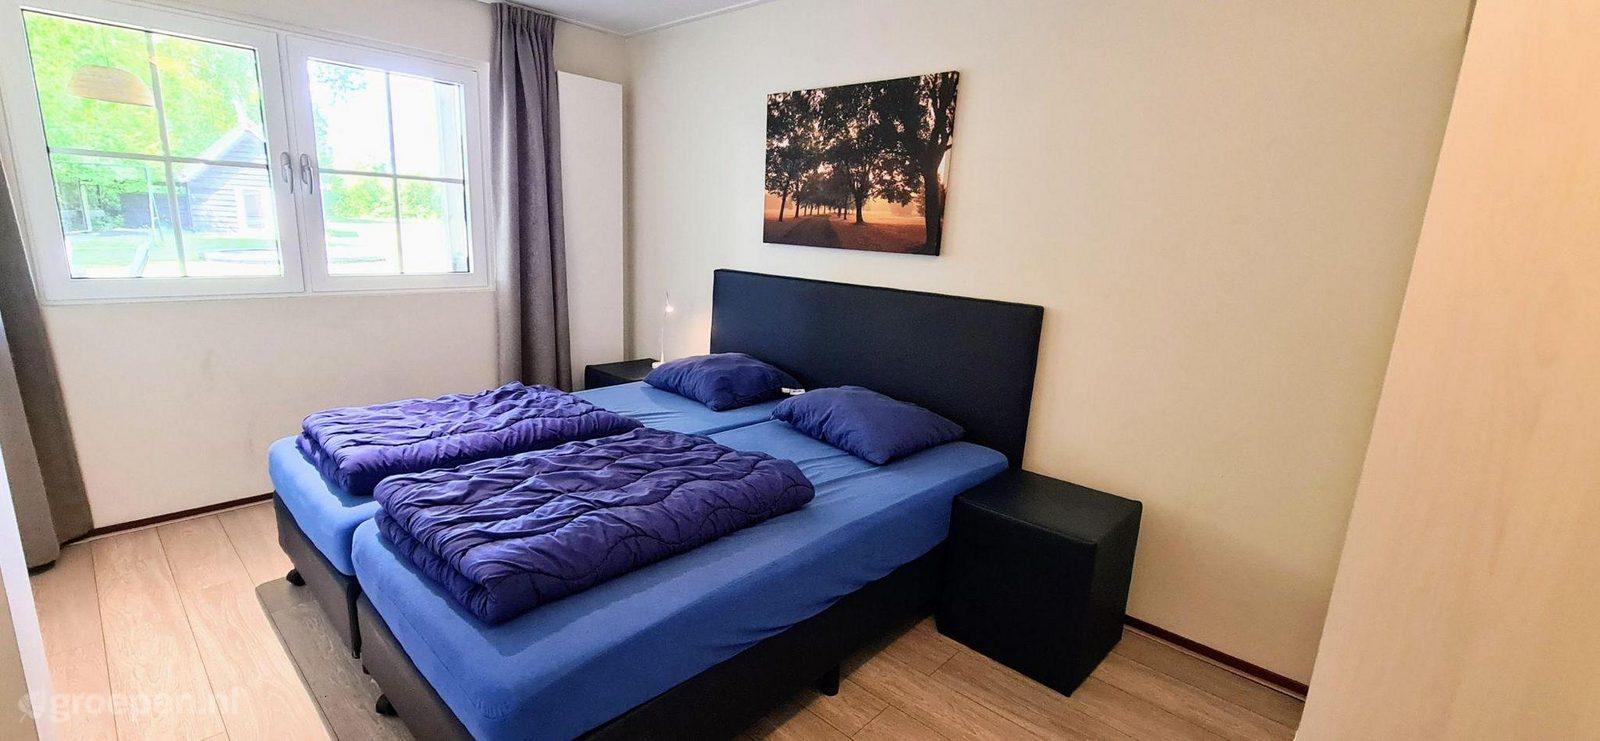 Group accommodation Vrouwenpolder (copy)